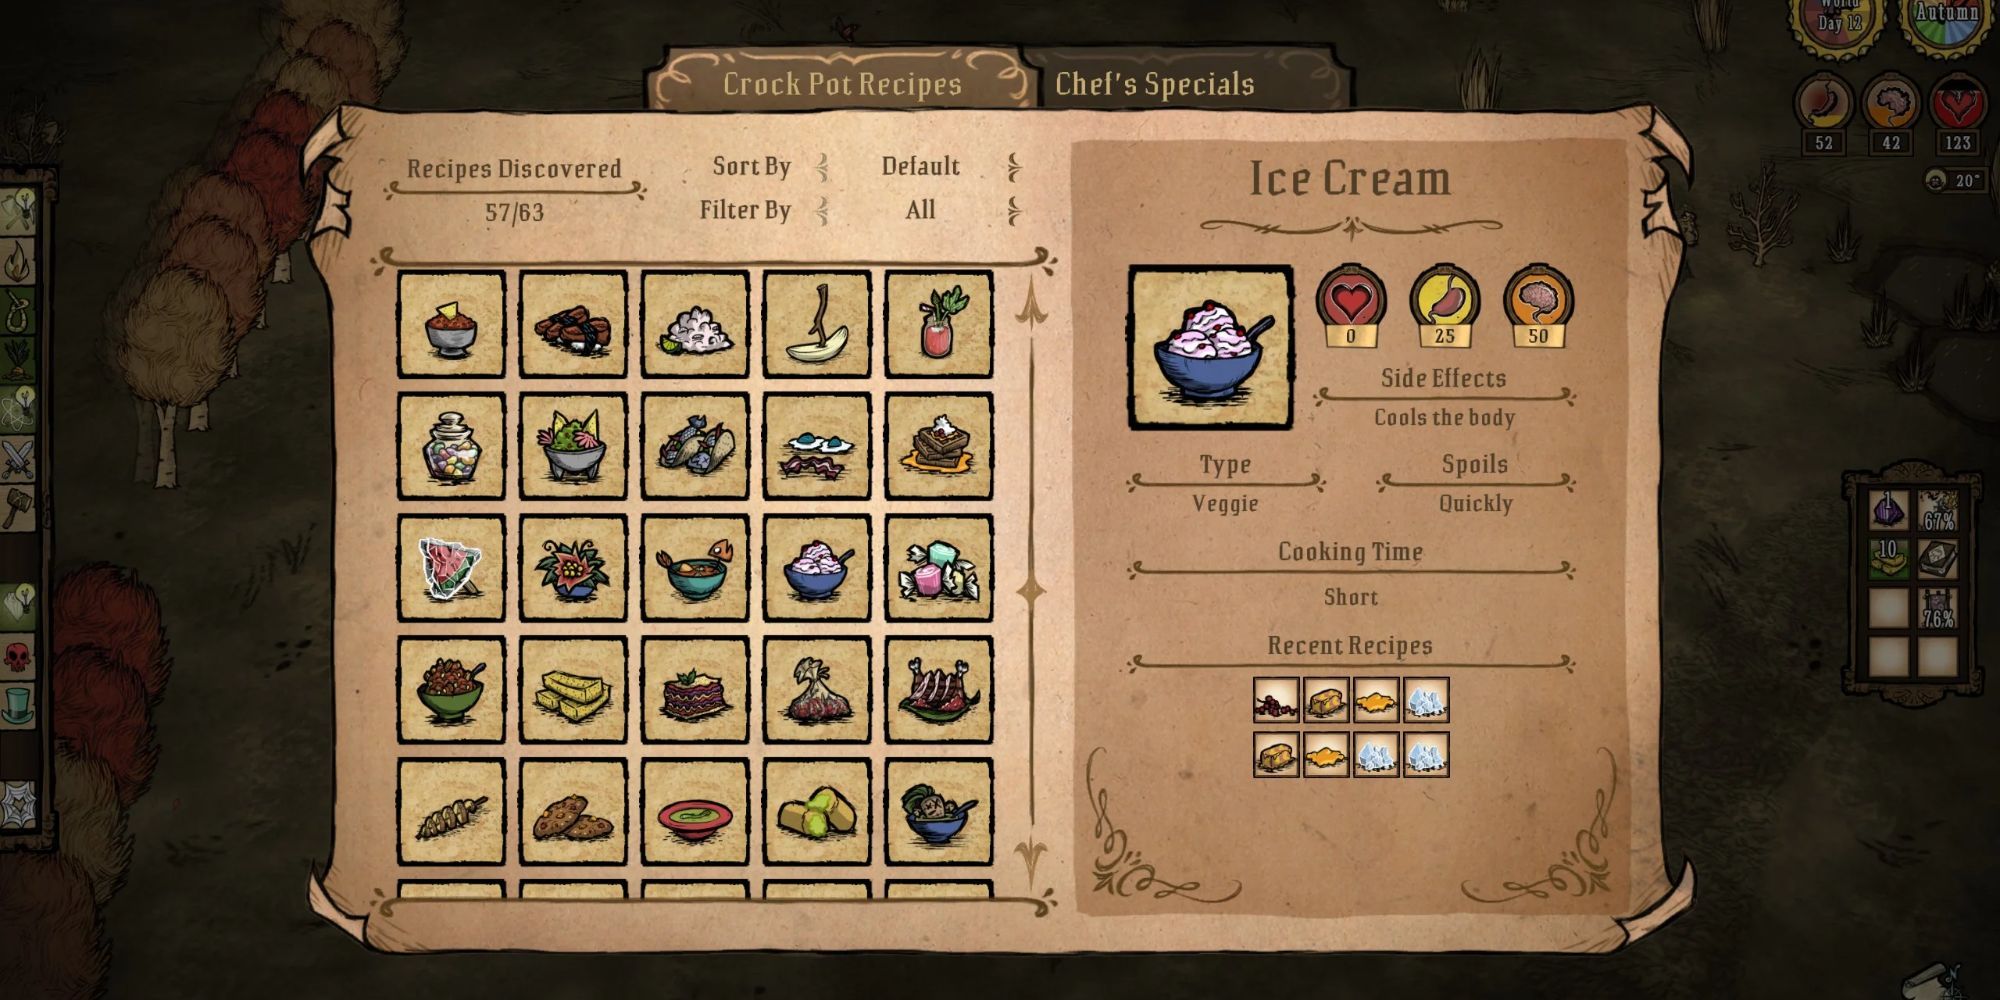 Ice Cream recipe card